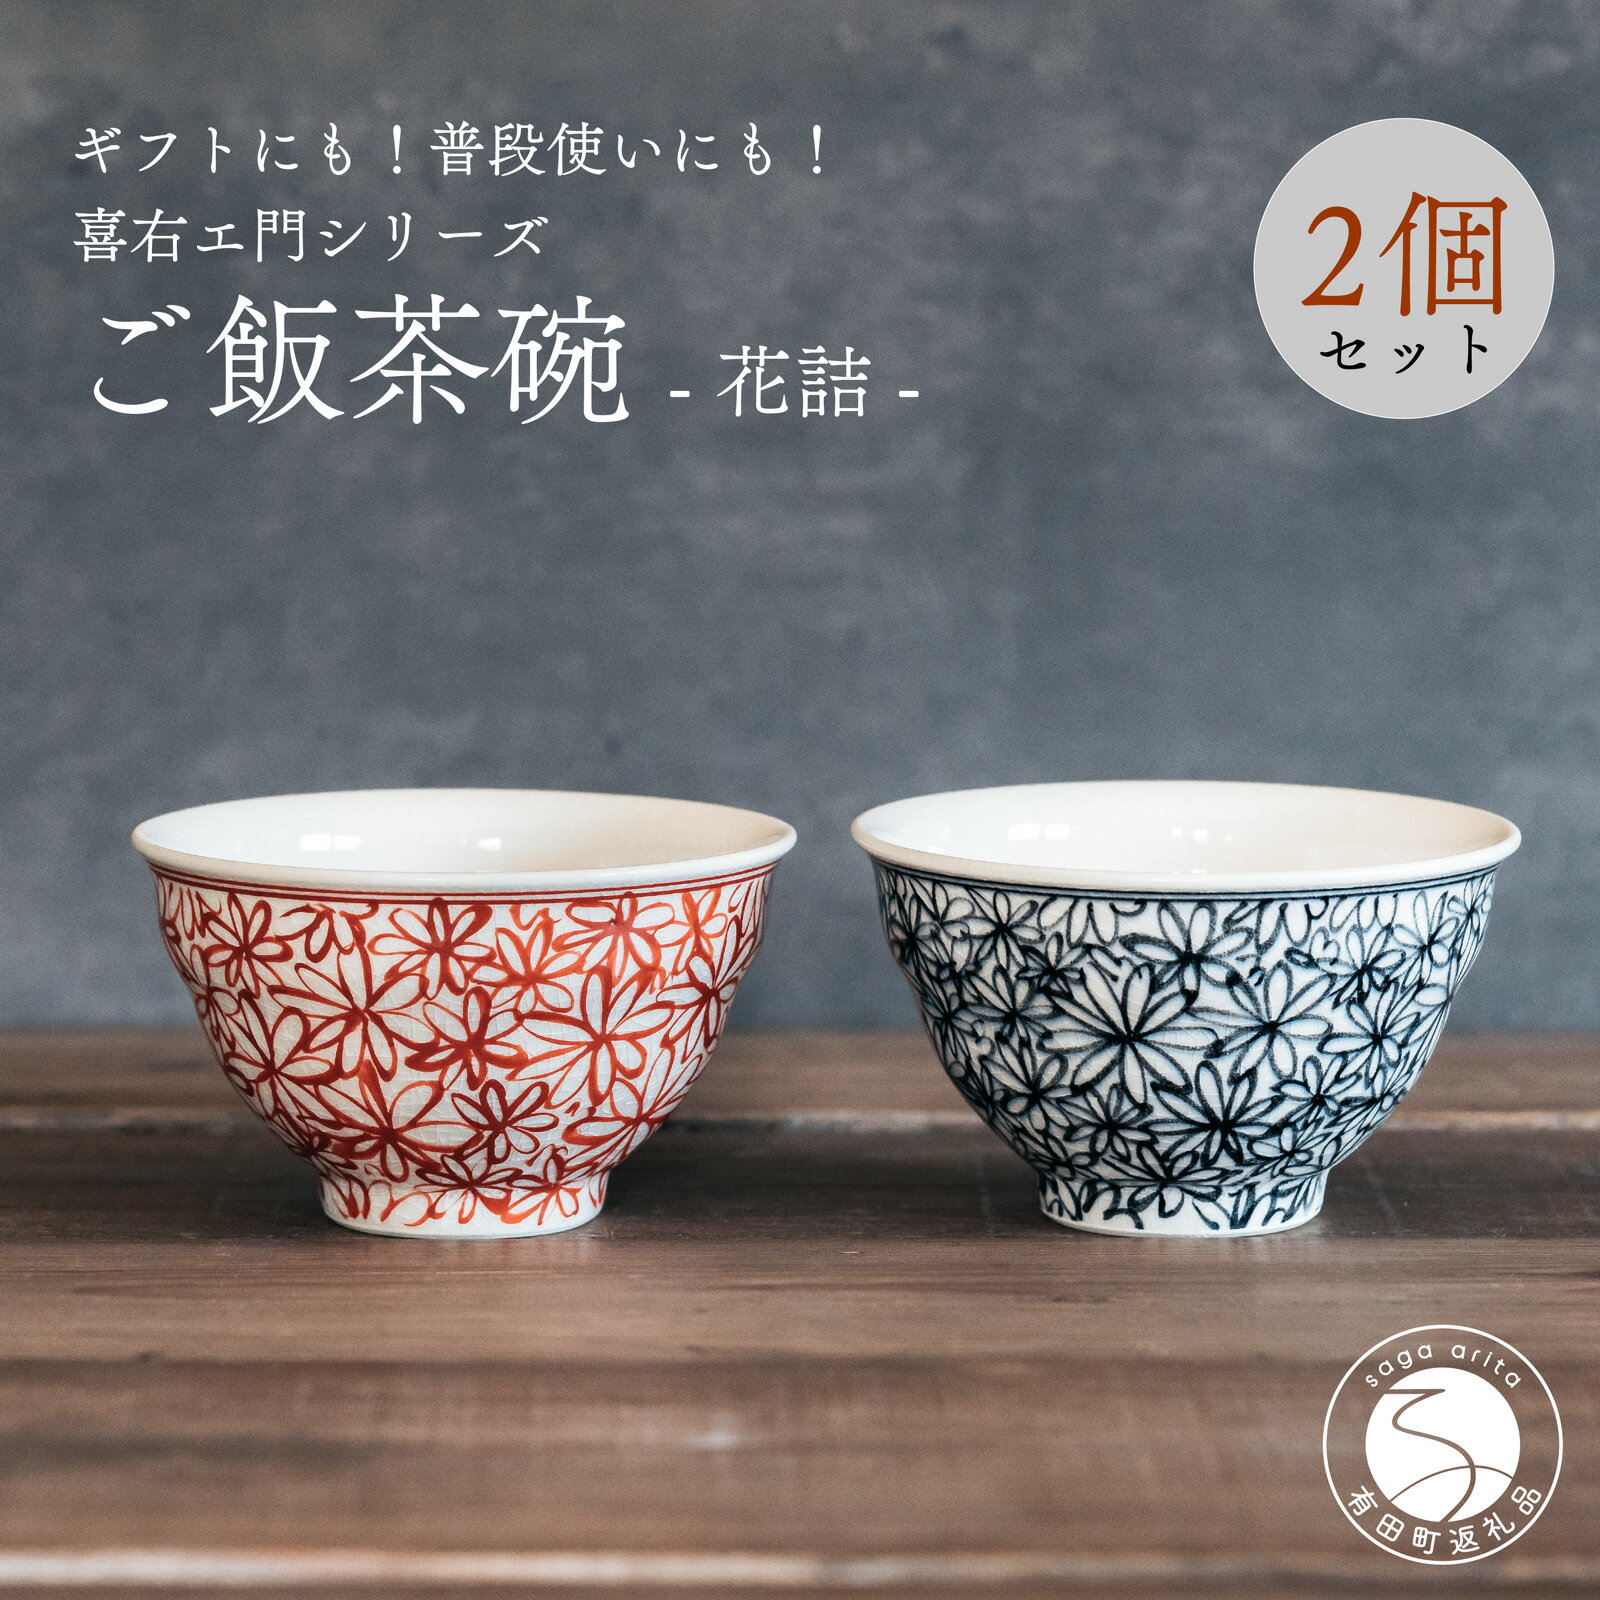 A30-422喜鶴製陶 [有田焼]ご飯茶碗 花詰 2個(赤・青 各1個)ペアセット 喜右エ門シリーズ